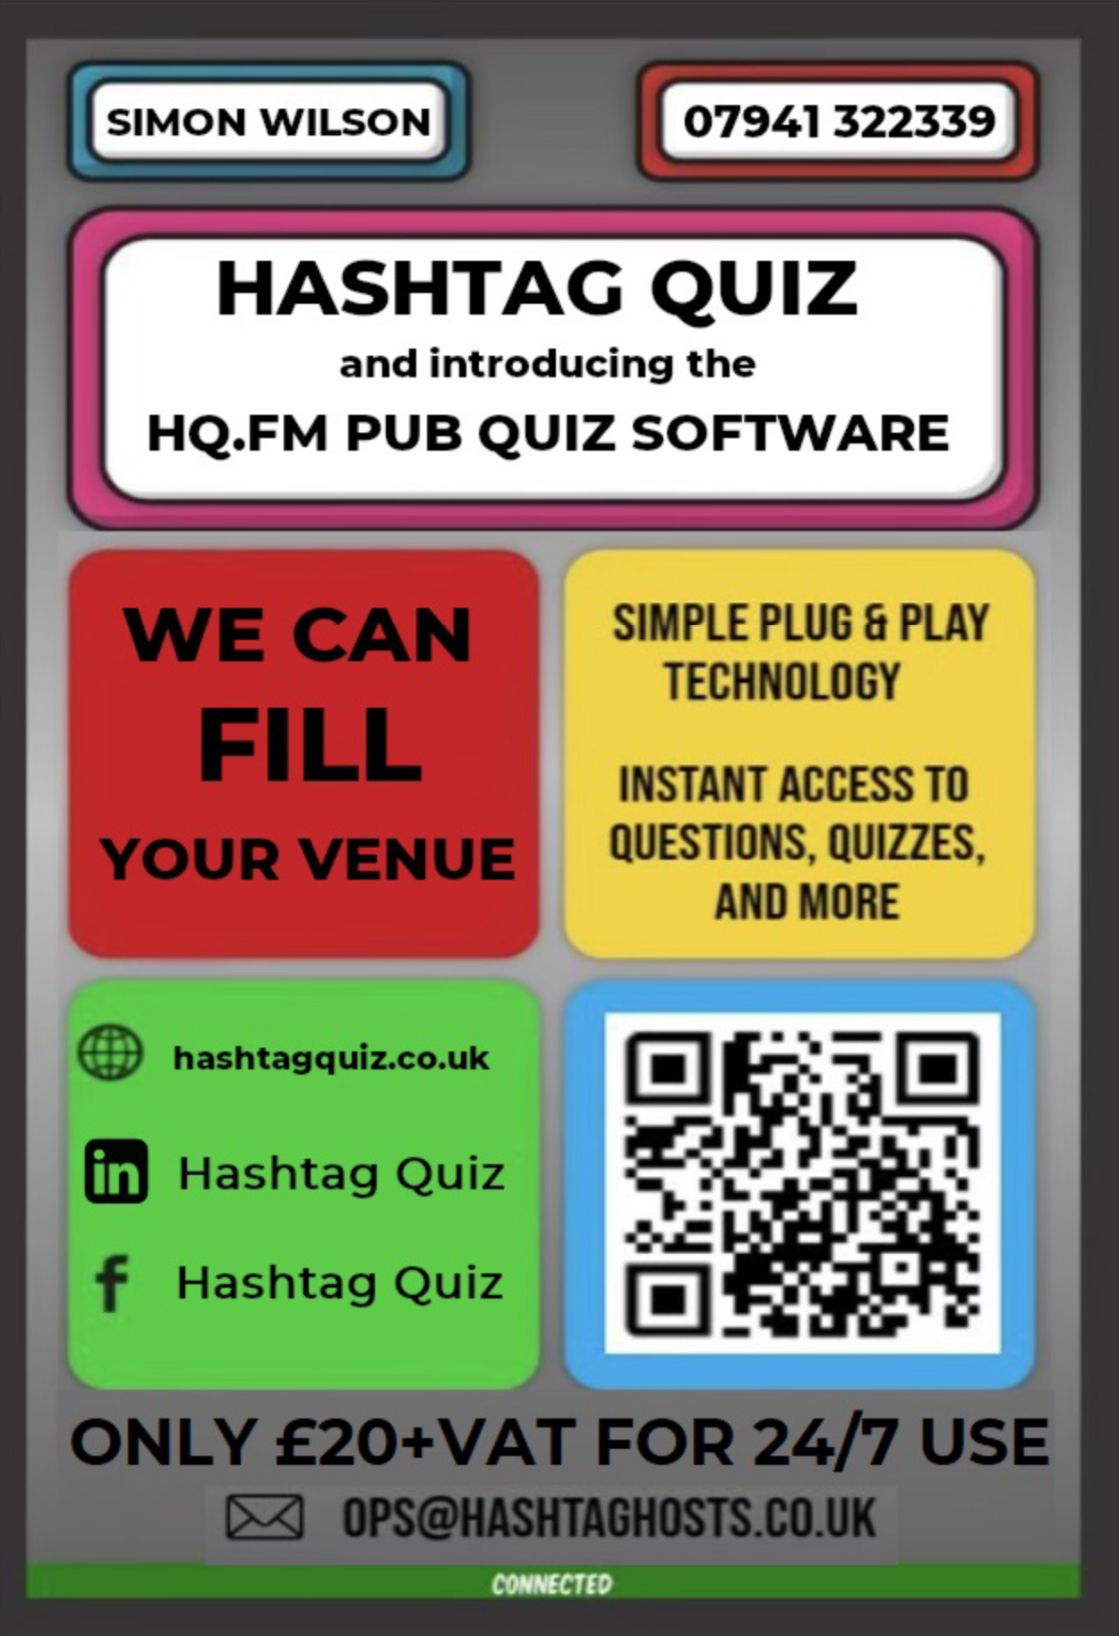 Hashtag Hosts Ltd @ The Pub Show